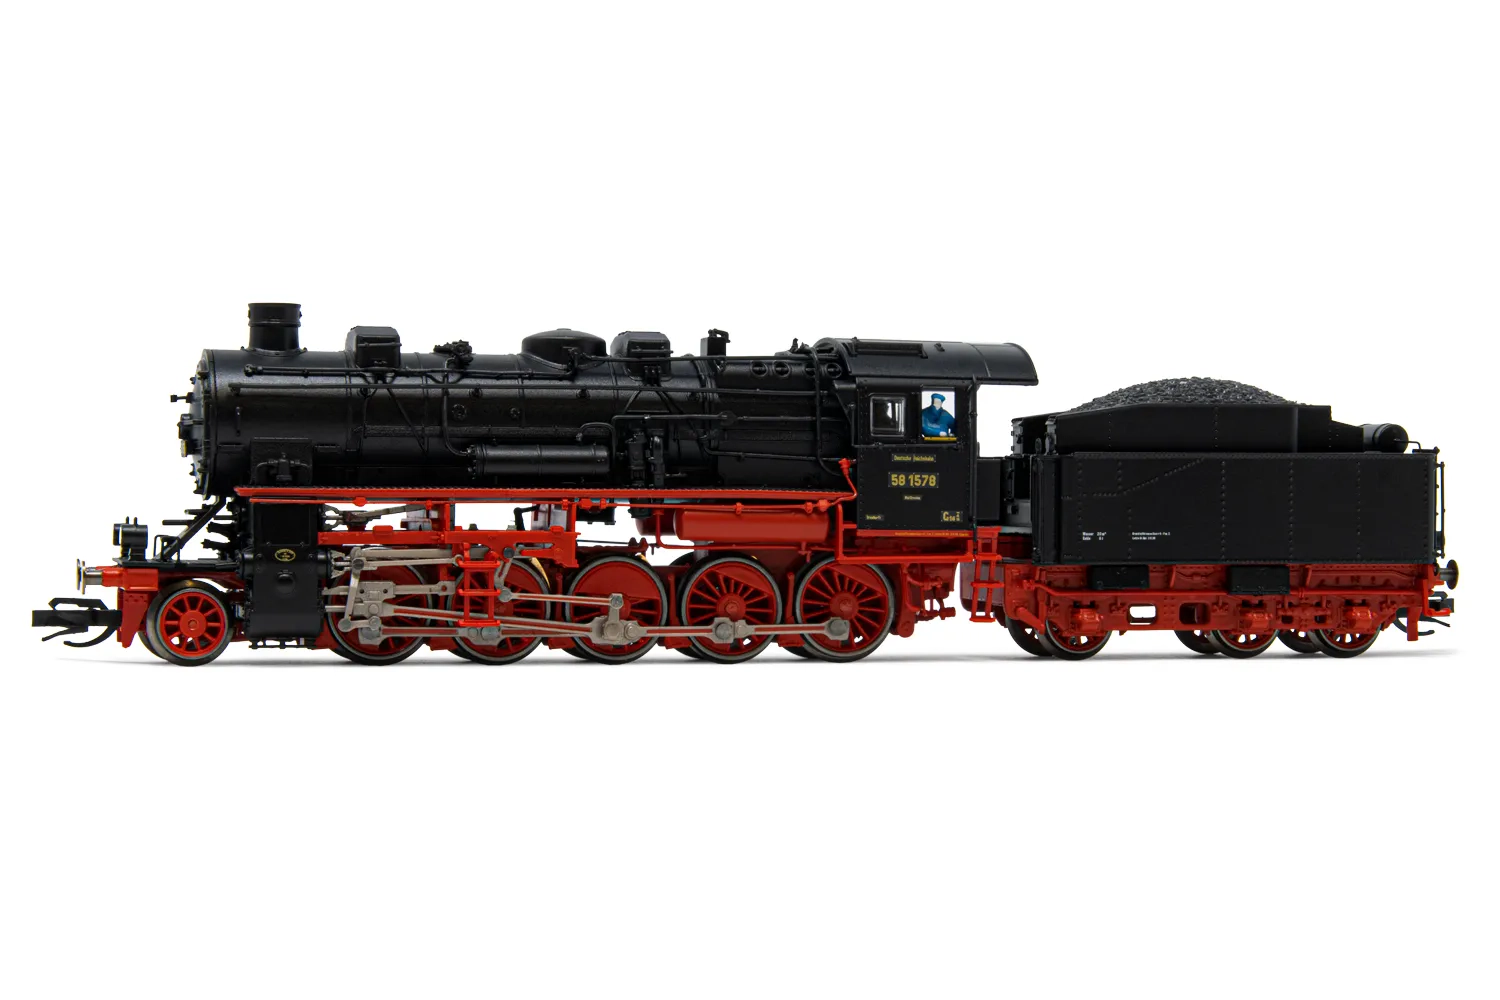 DRG, locomotiva a vapore classe 58 1578, livrea rossa/nera, ep. II